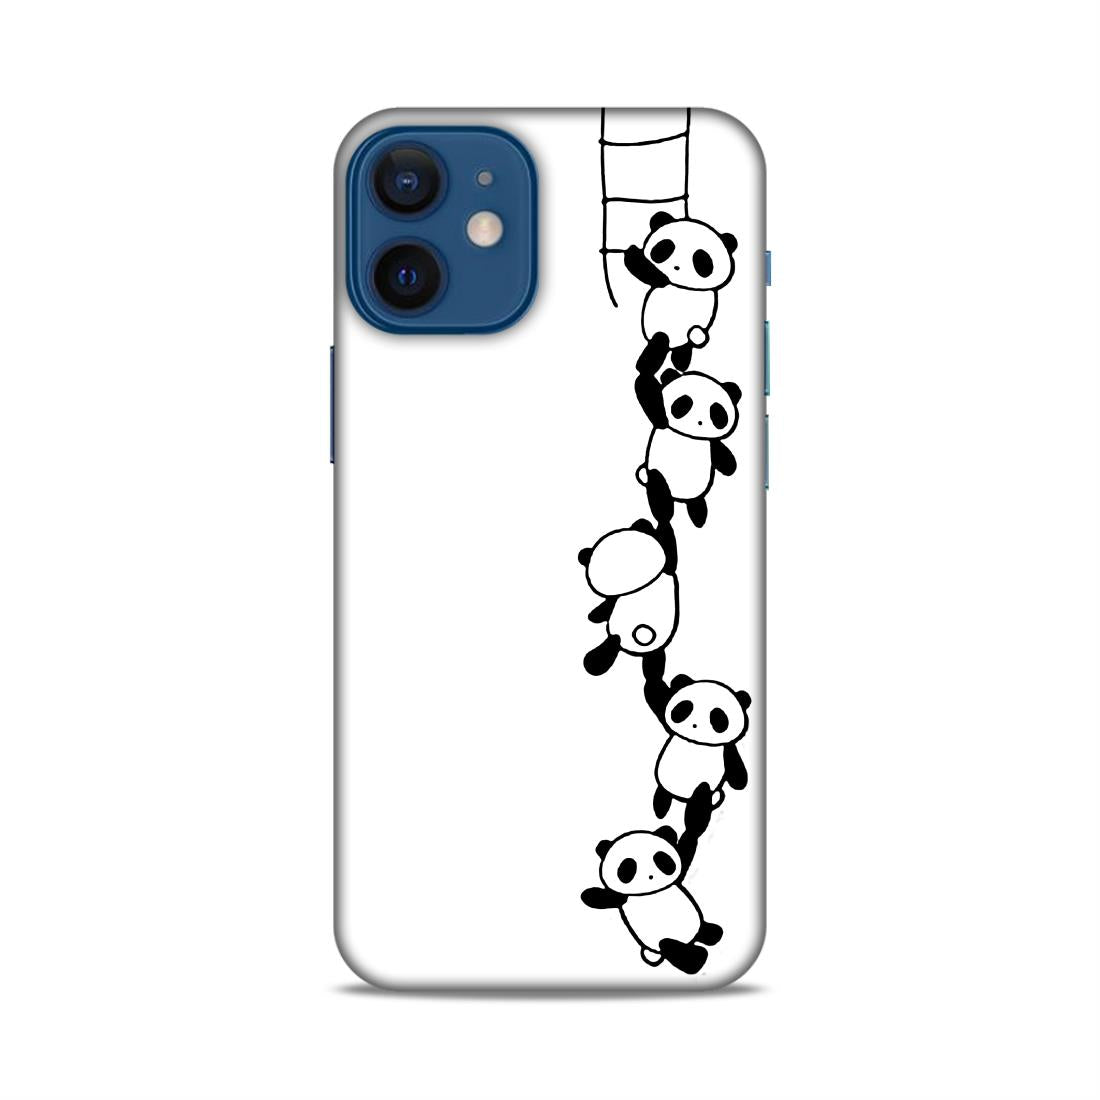 Panda Hard Back Case For Apple iPhone 12 Mini